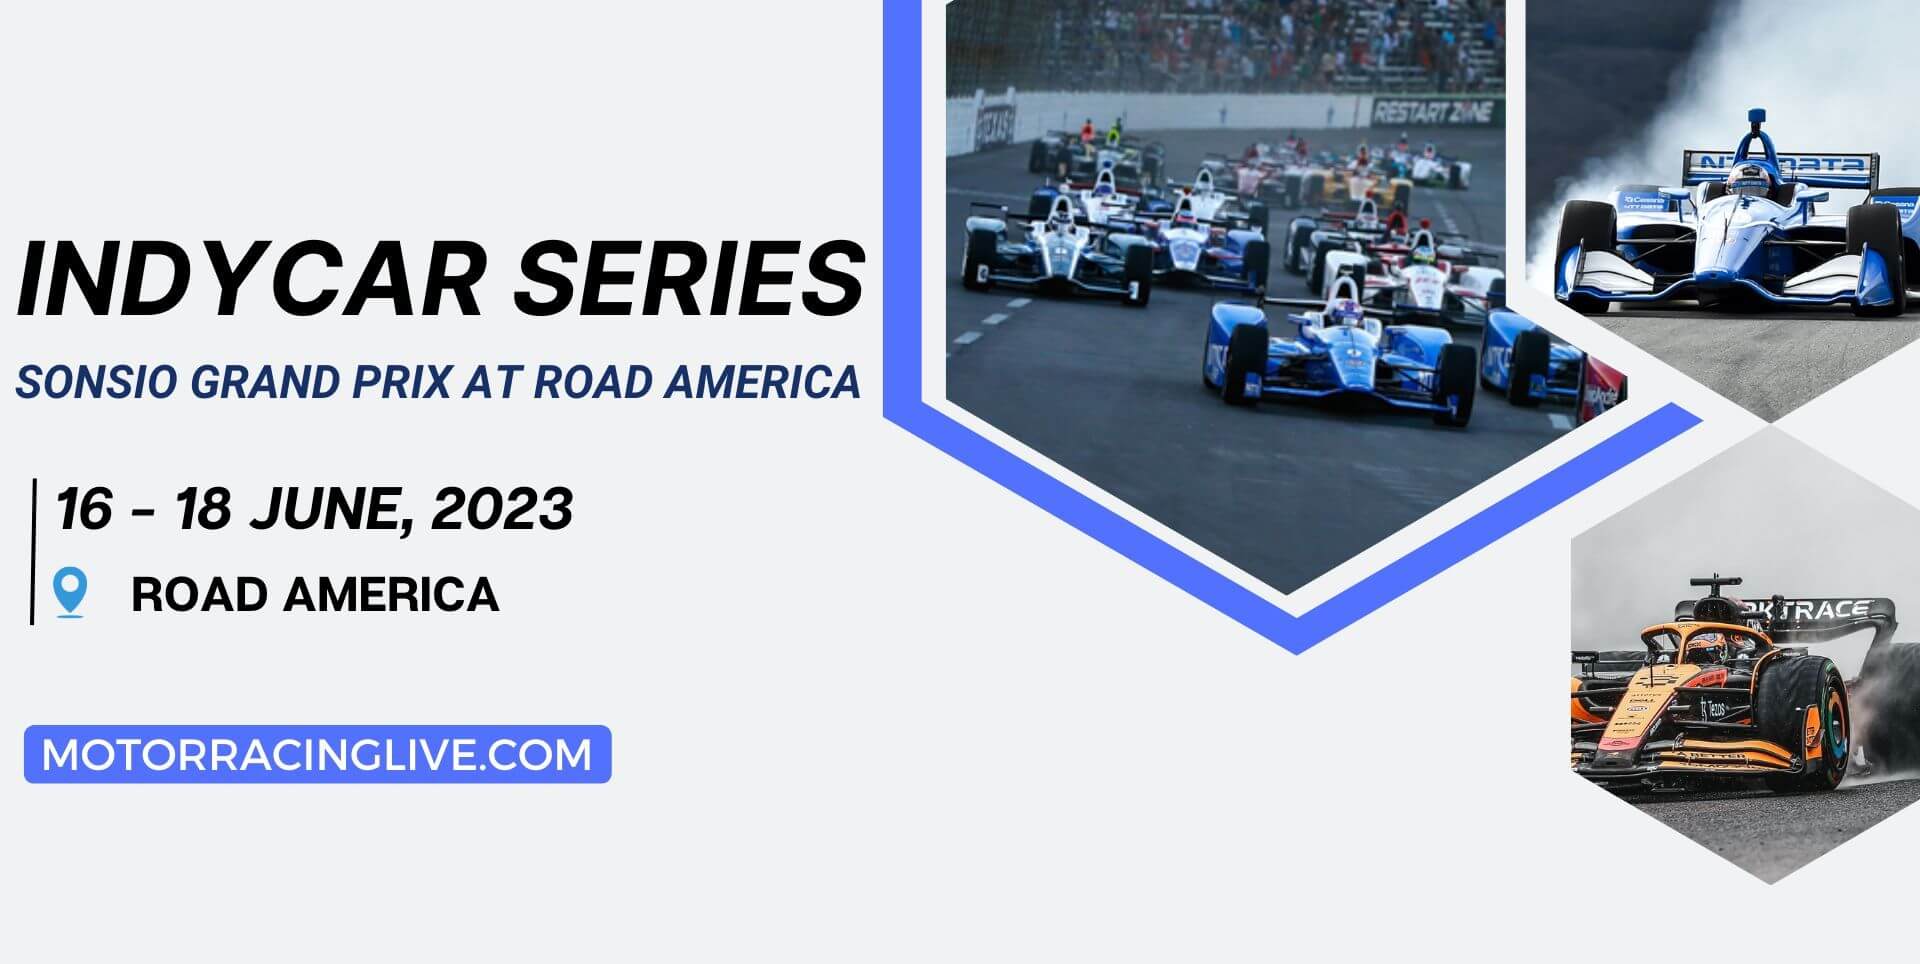 Sonsio Grand Prix At Road America Live Stream 2023 | Indycar